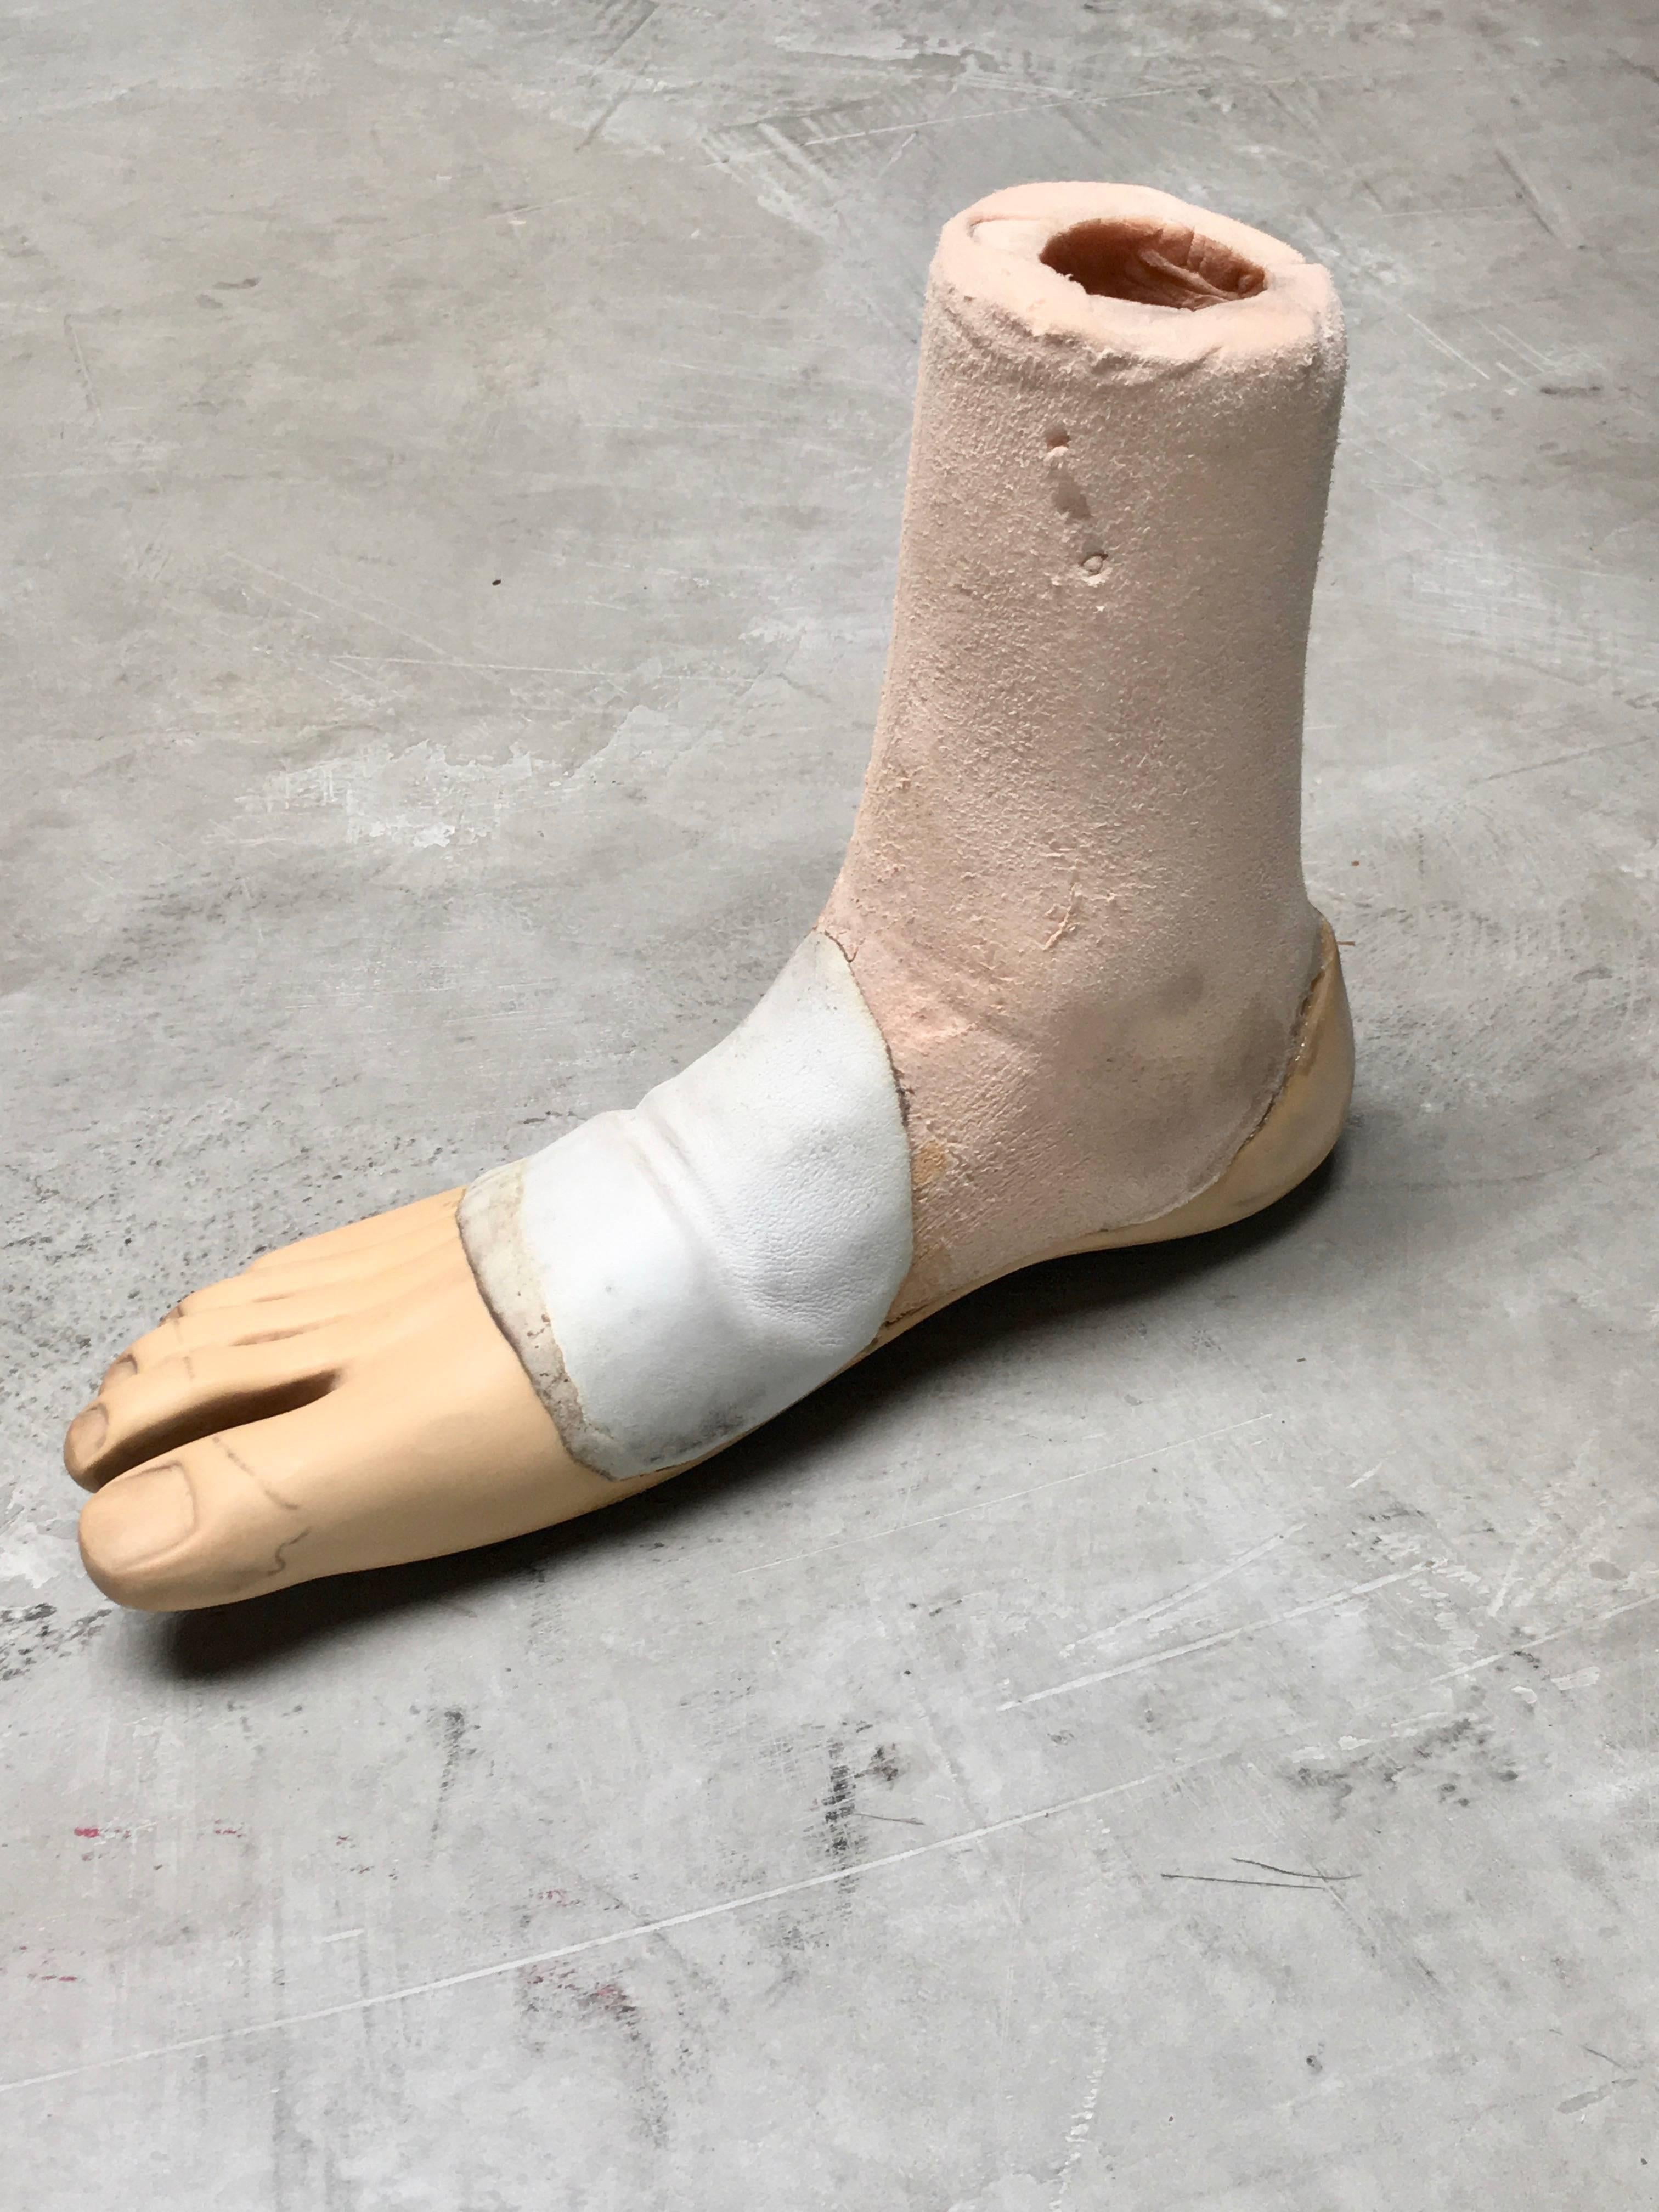 antique prosthetic leg